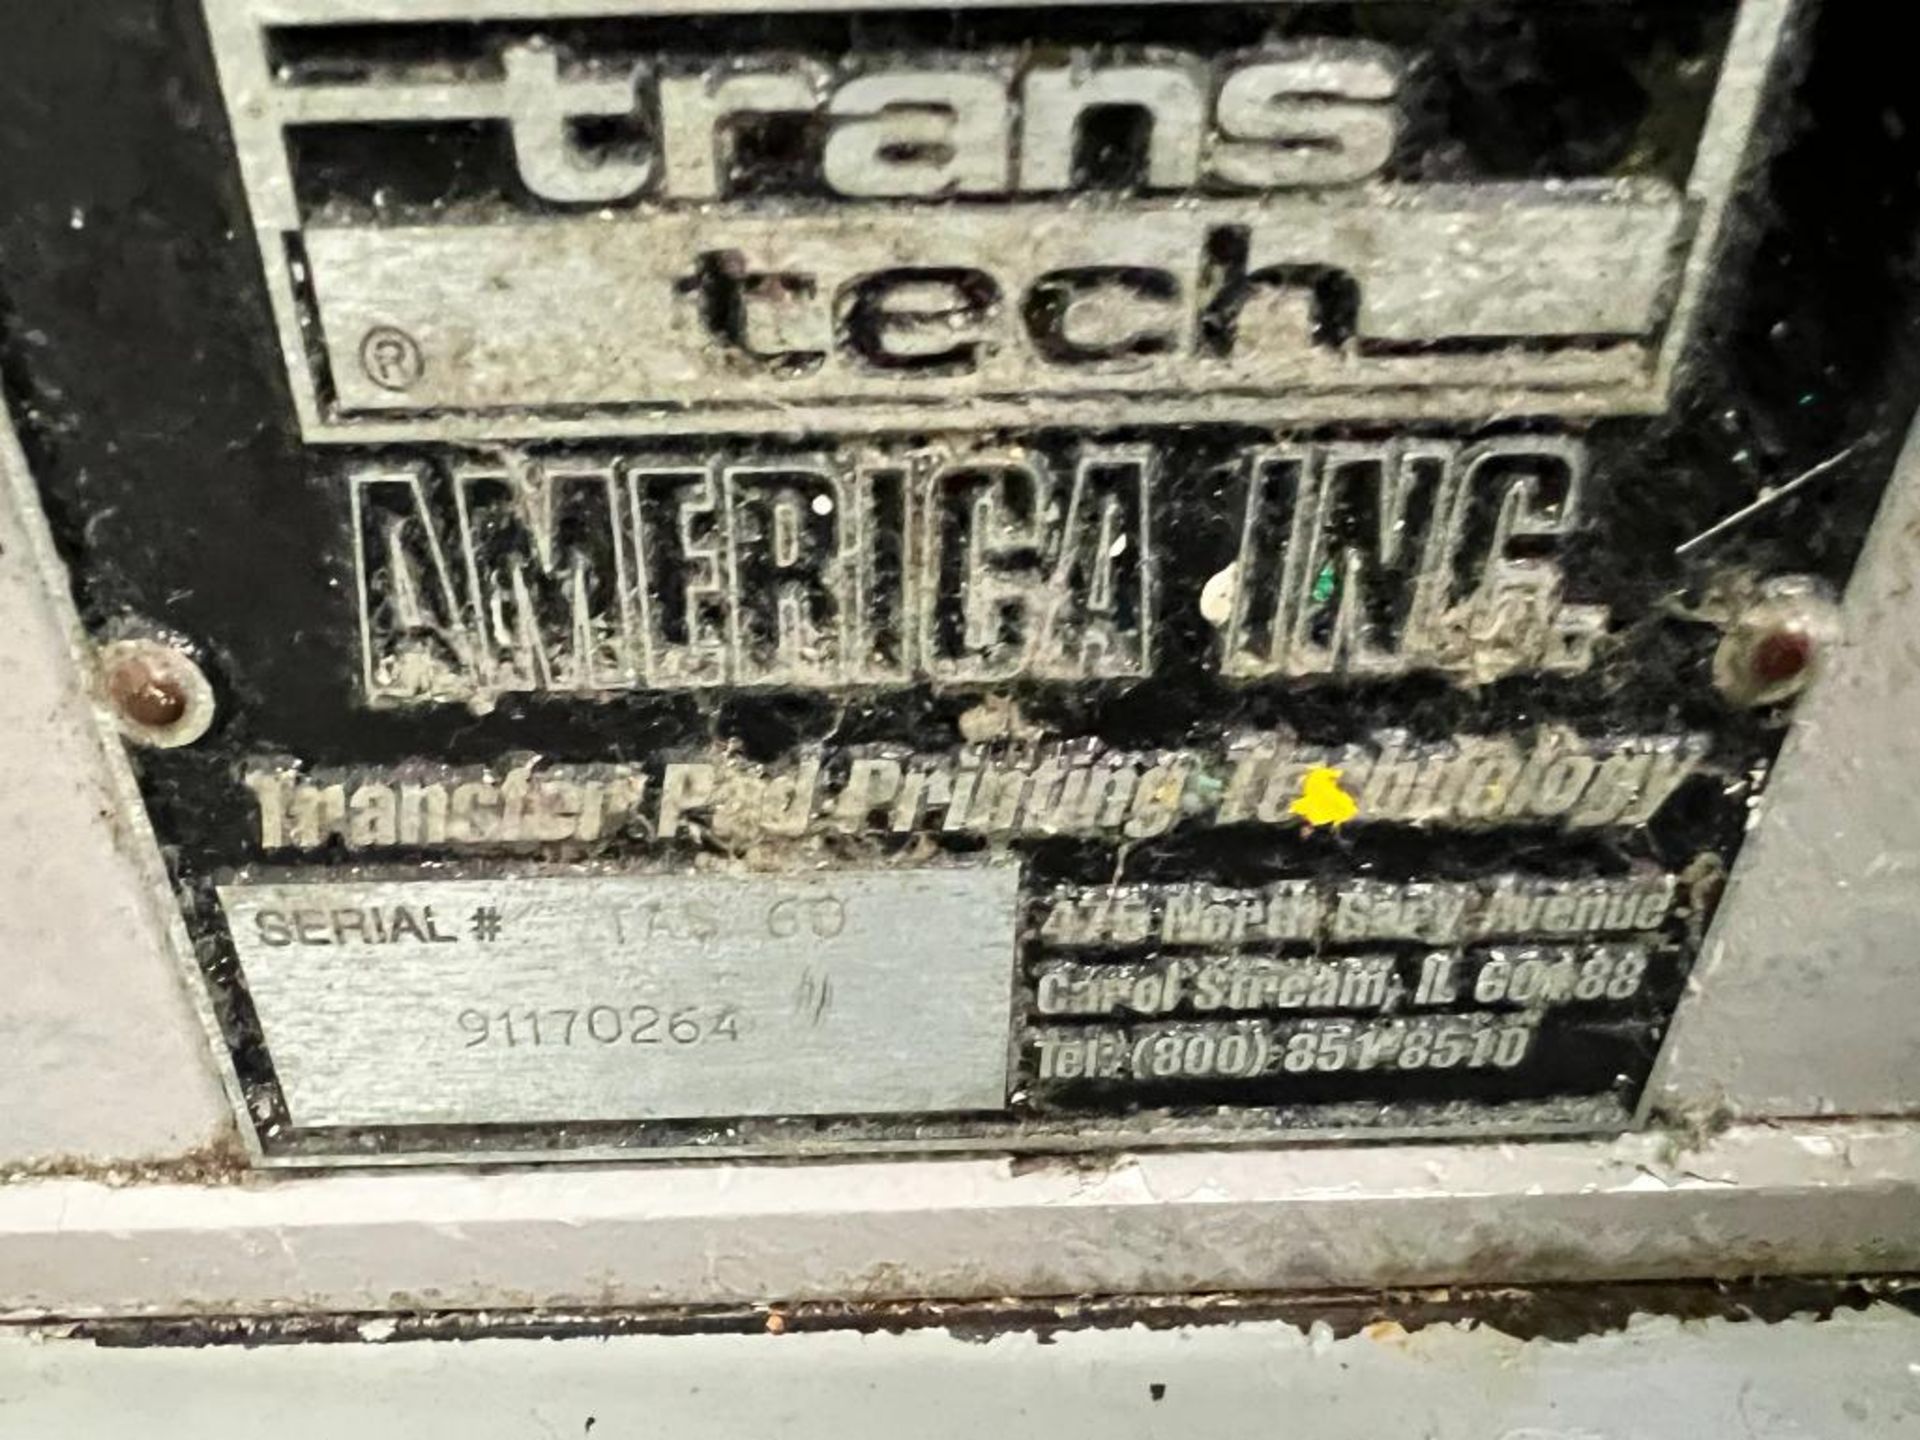 Trans Tech Sealcup 60 Pad Printer, Model TAS-60, S/N 91170264 - Bild 4 aus 4